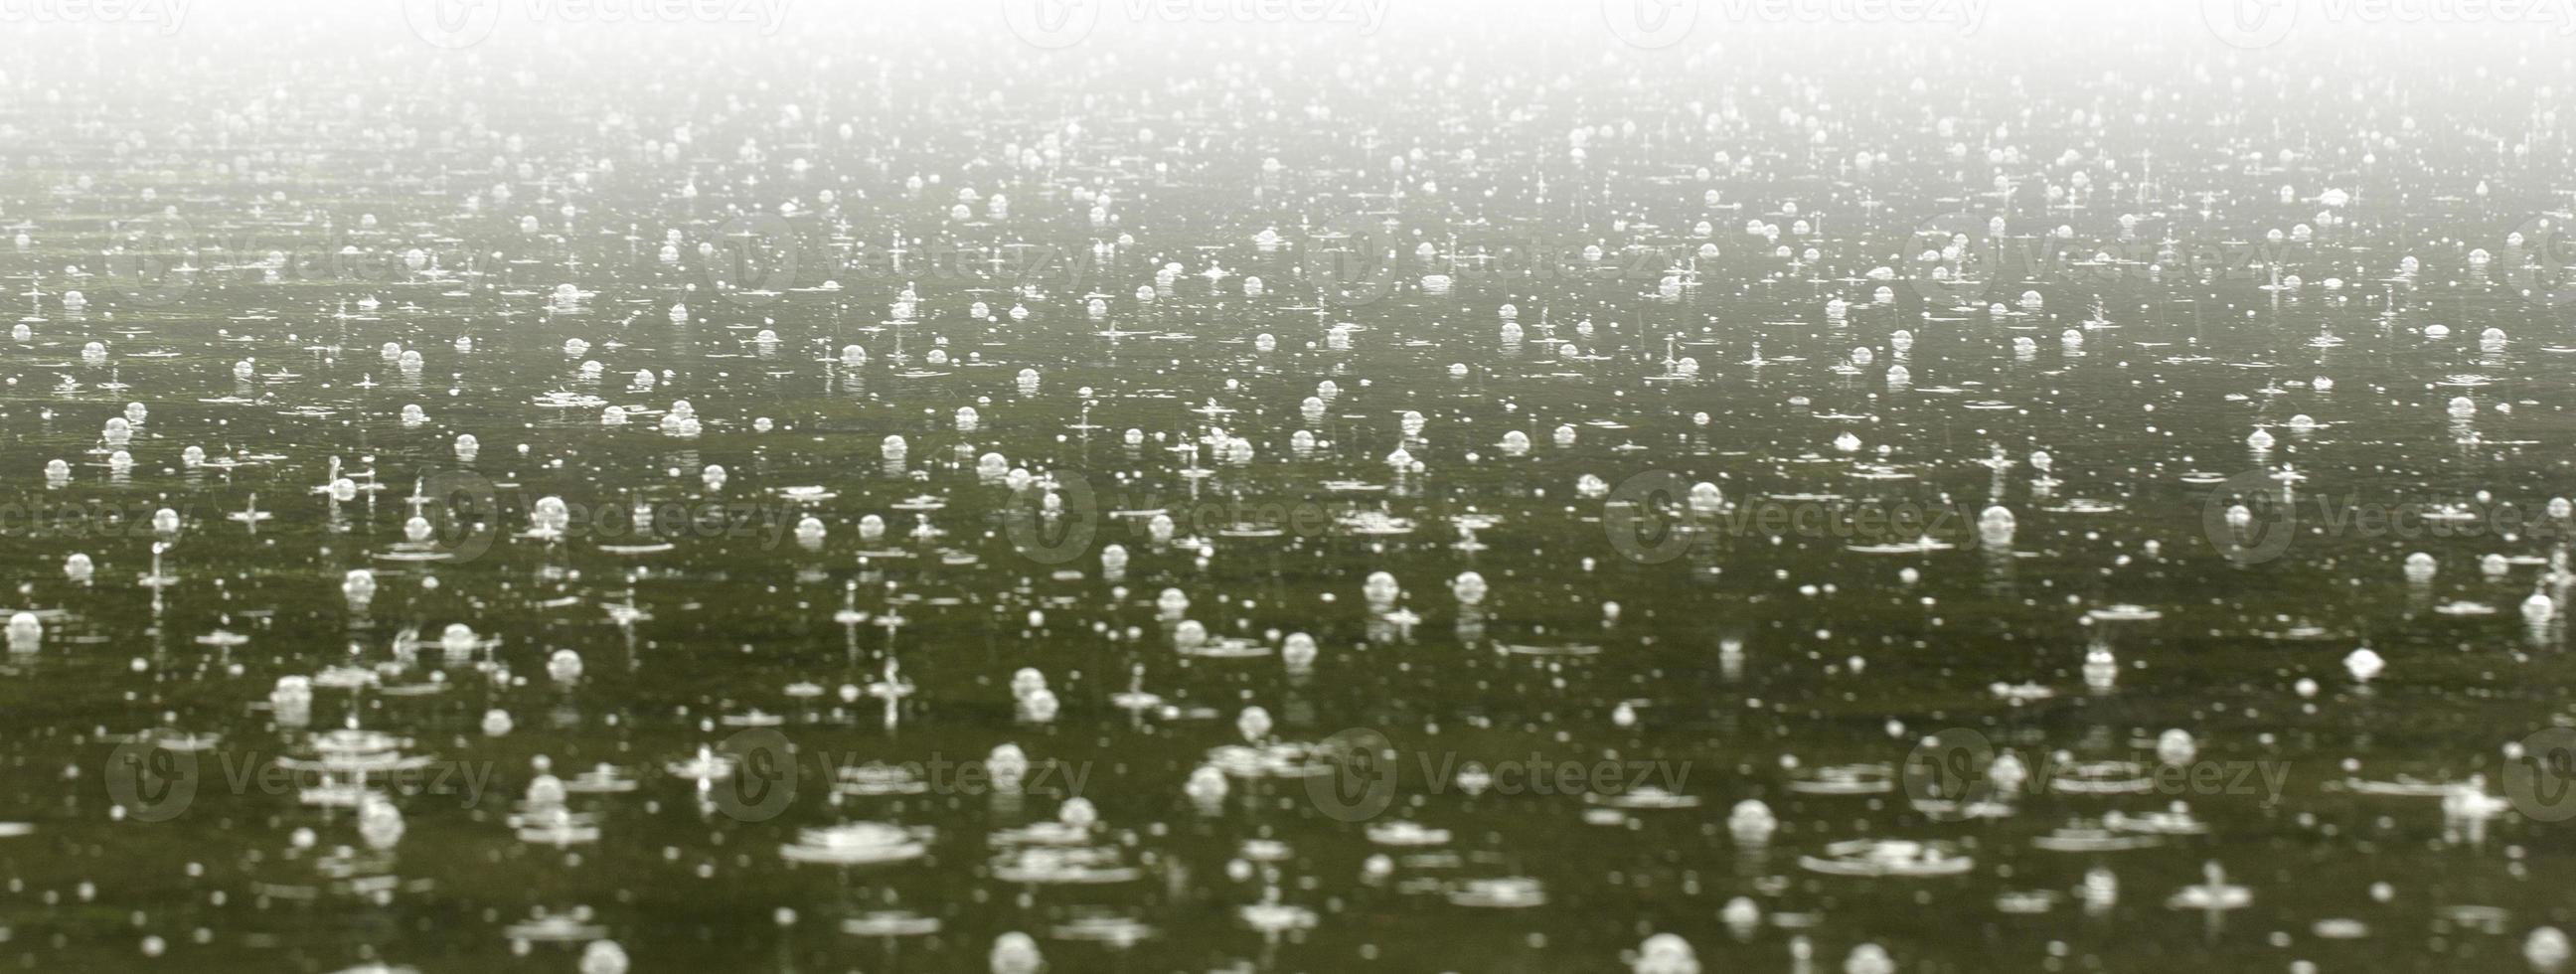 selektiv fokus stark regn med bubblor på de grön skog sjö foto